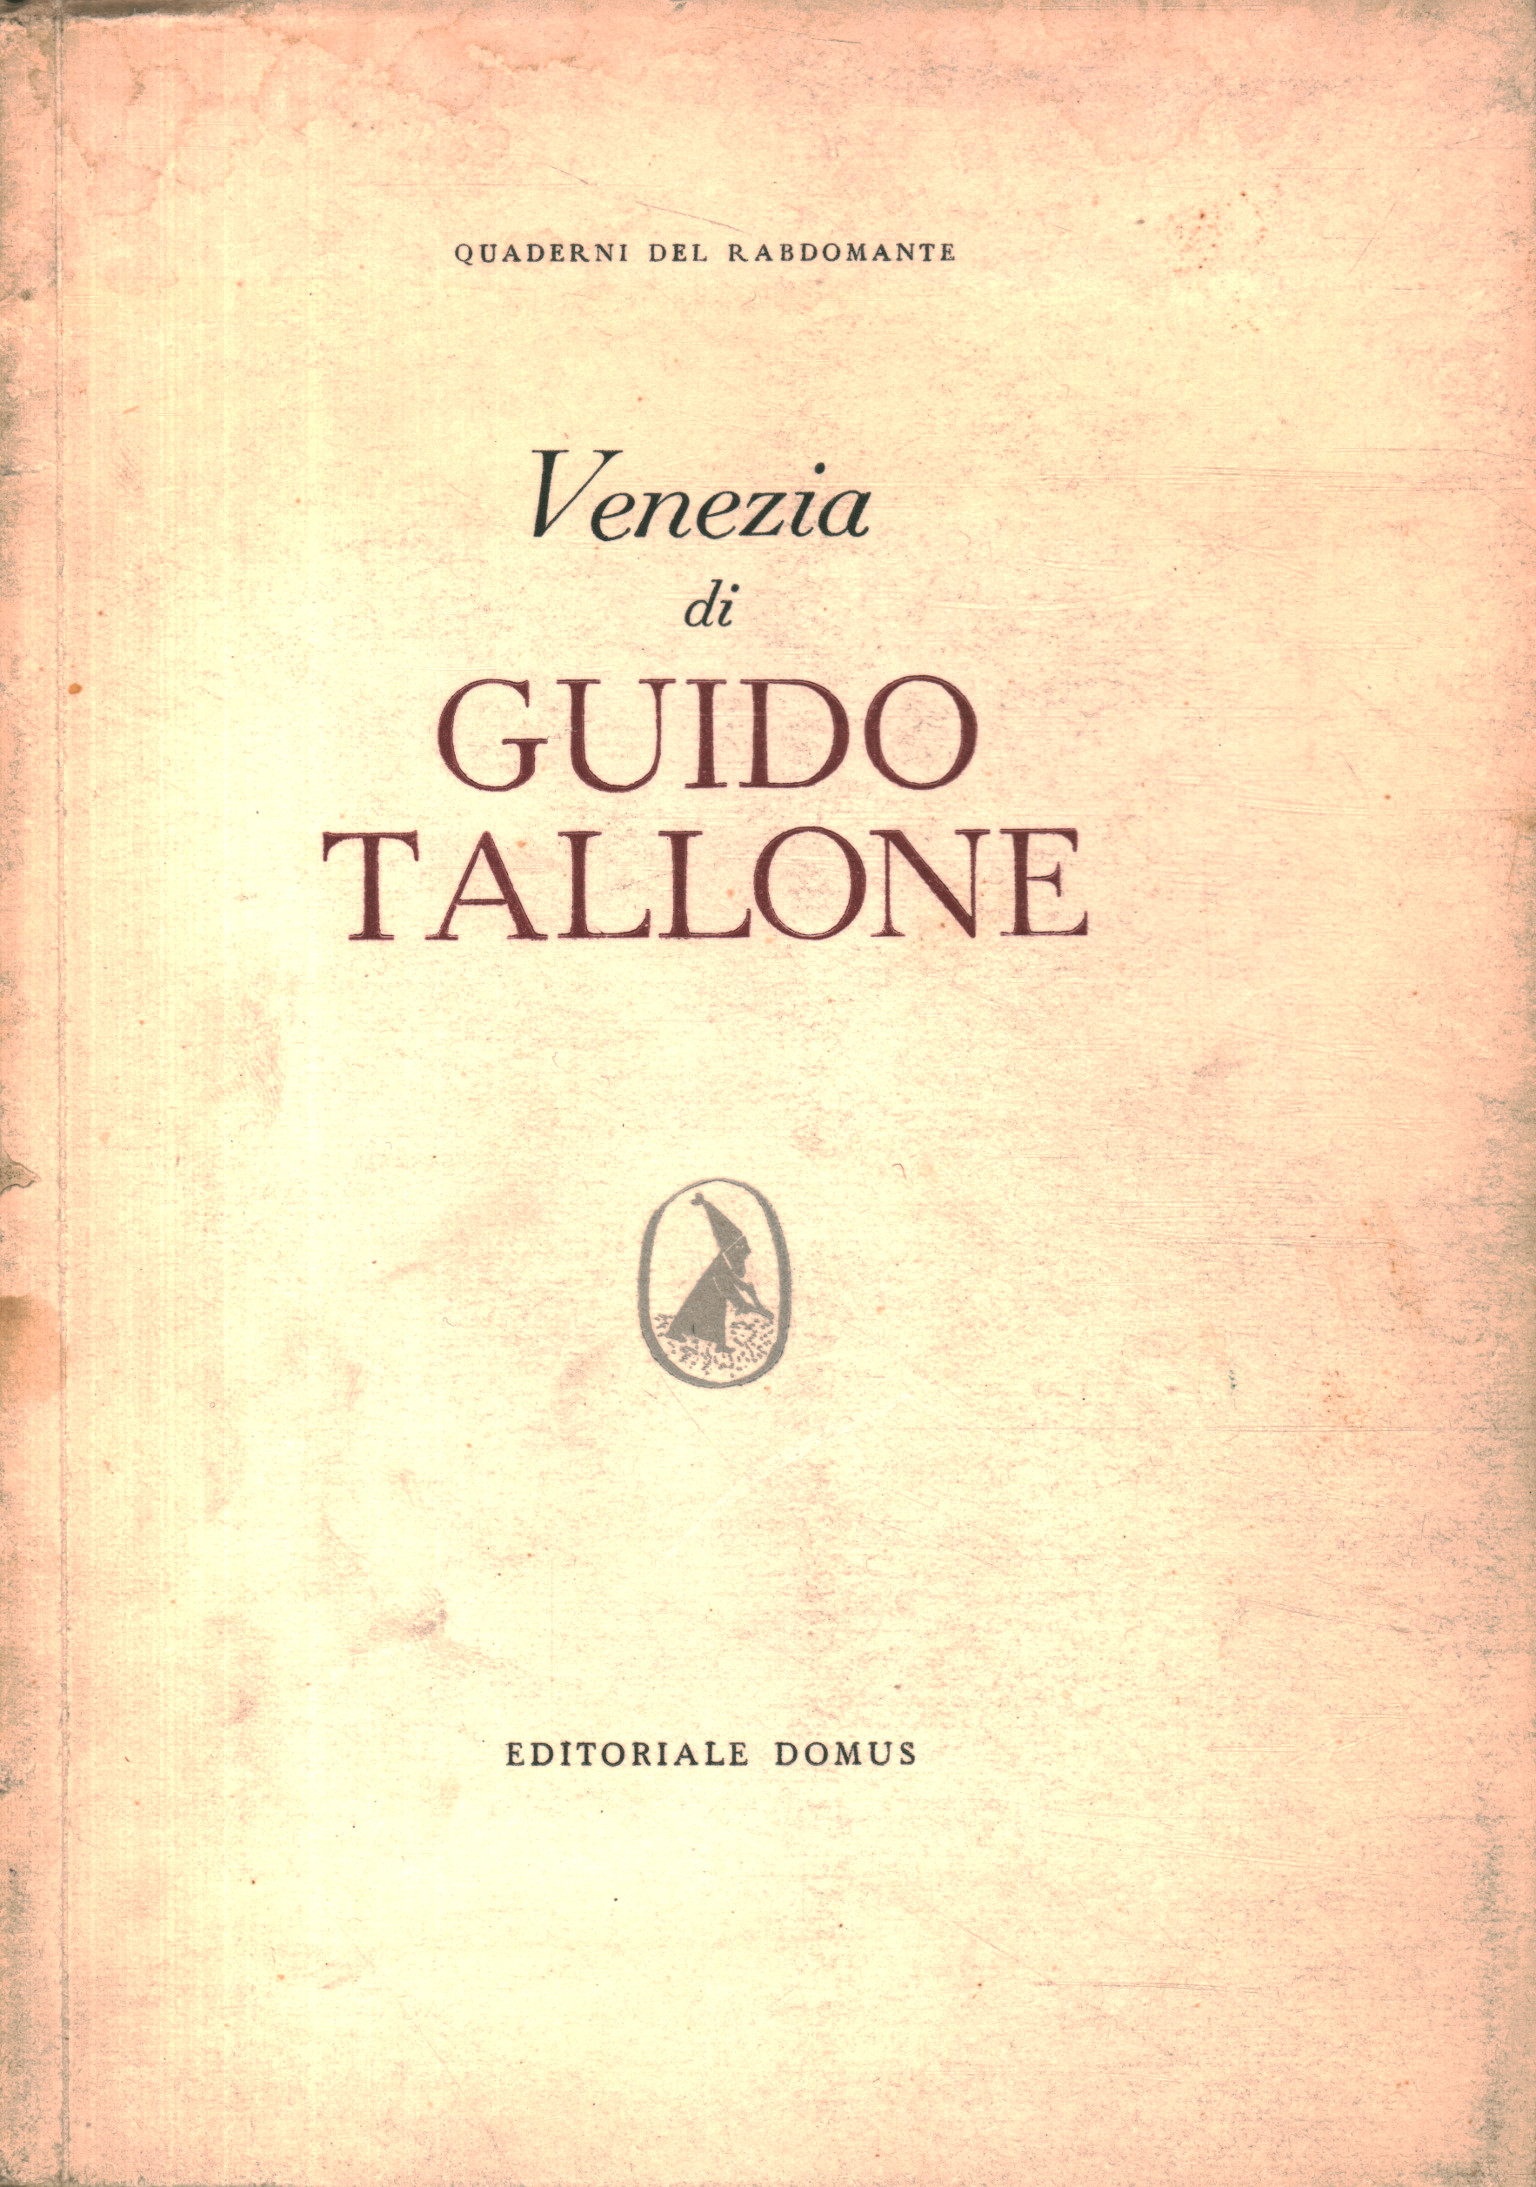 Venezia di Guido Tallone